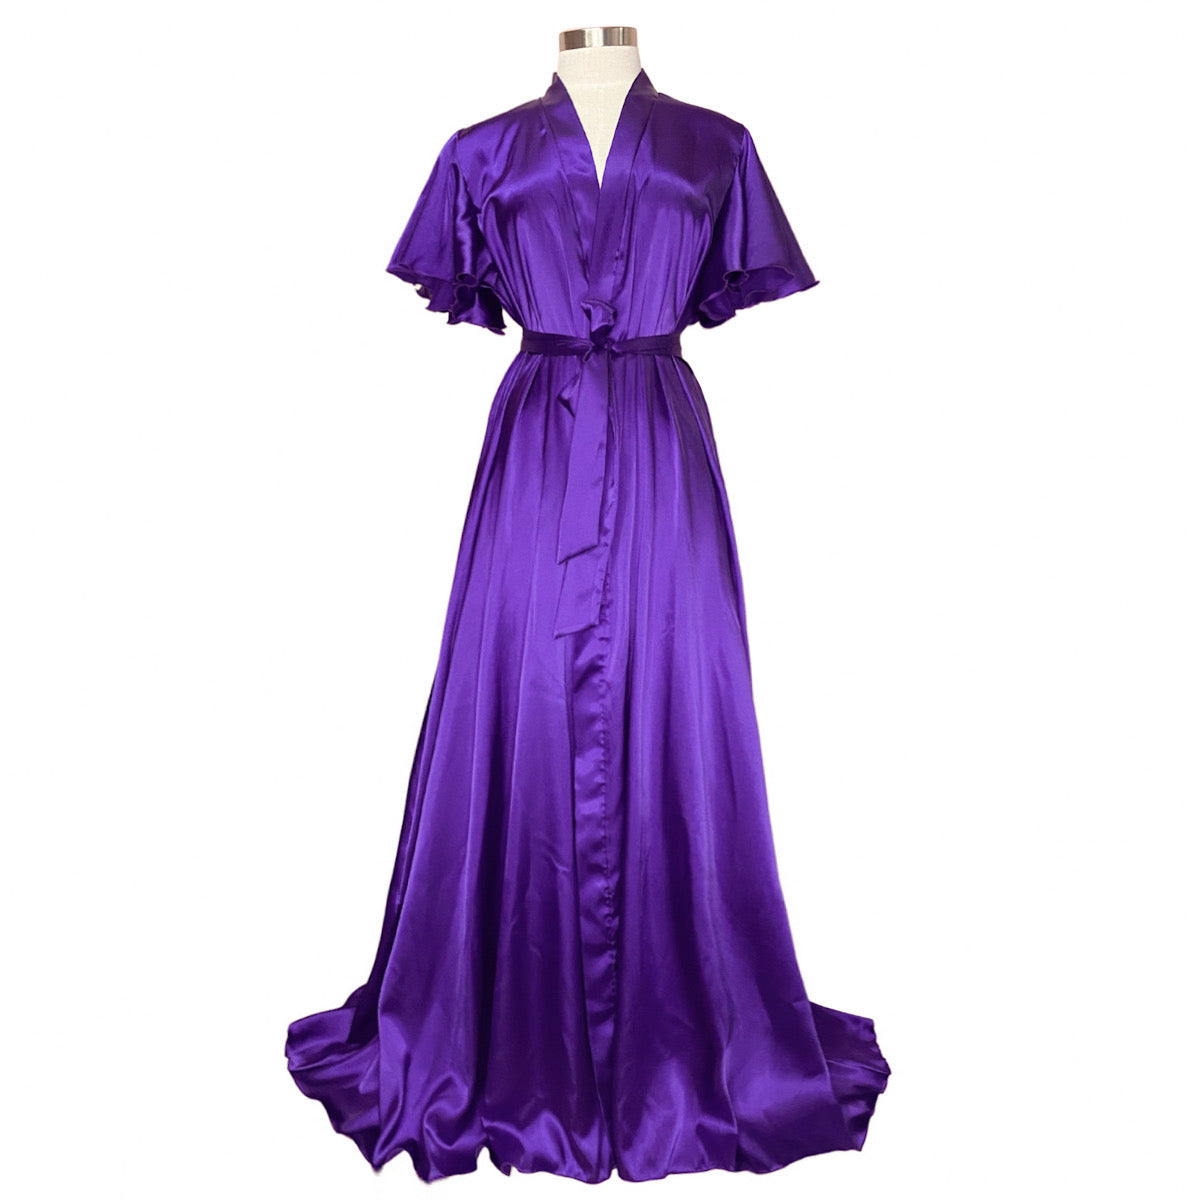 Hera Robe - Royal Purple